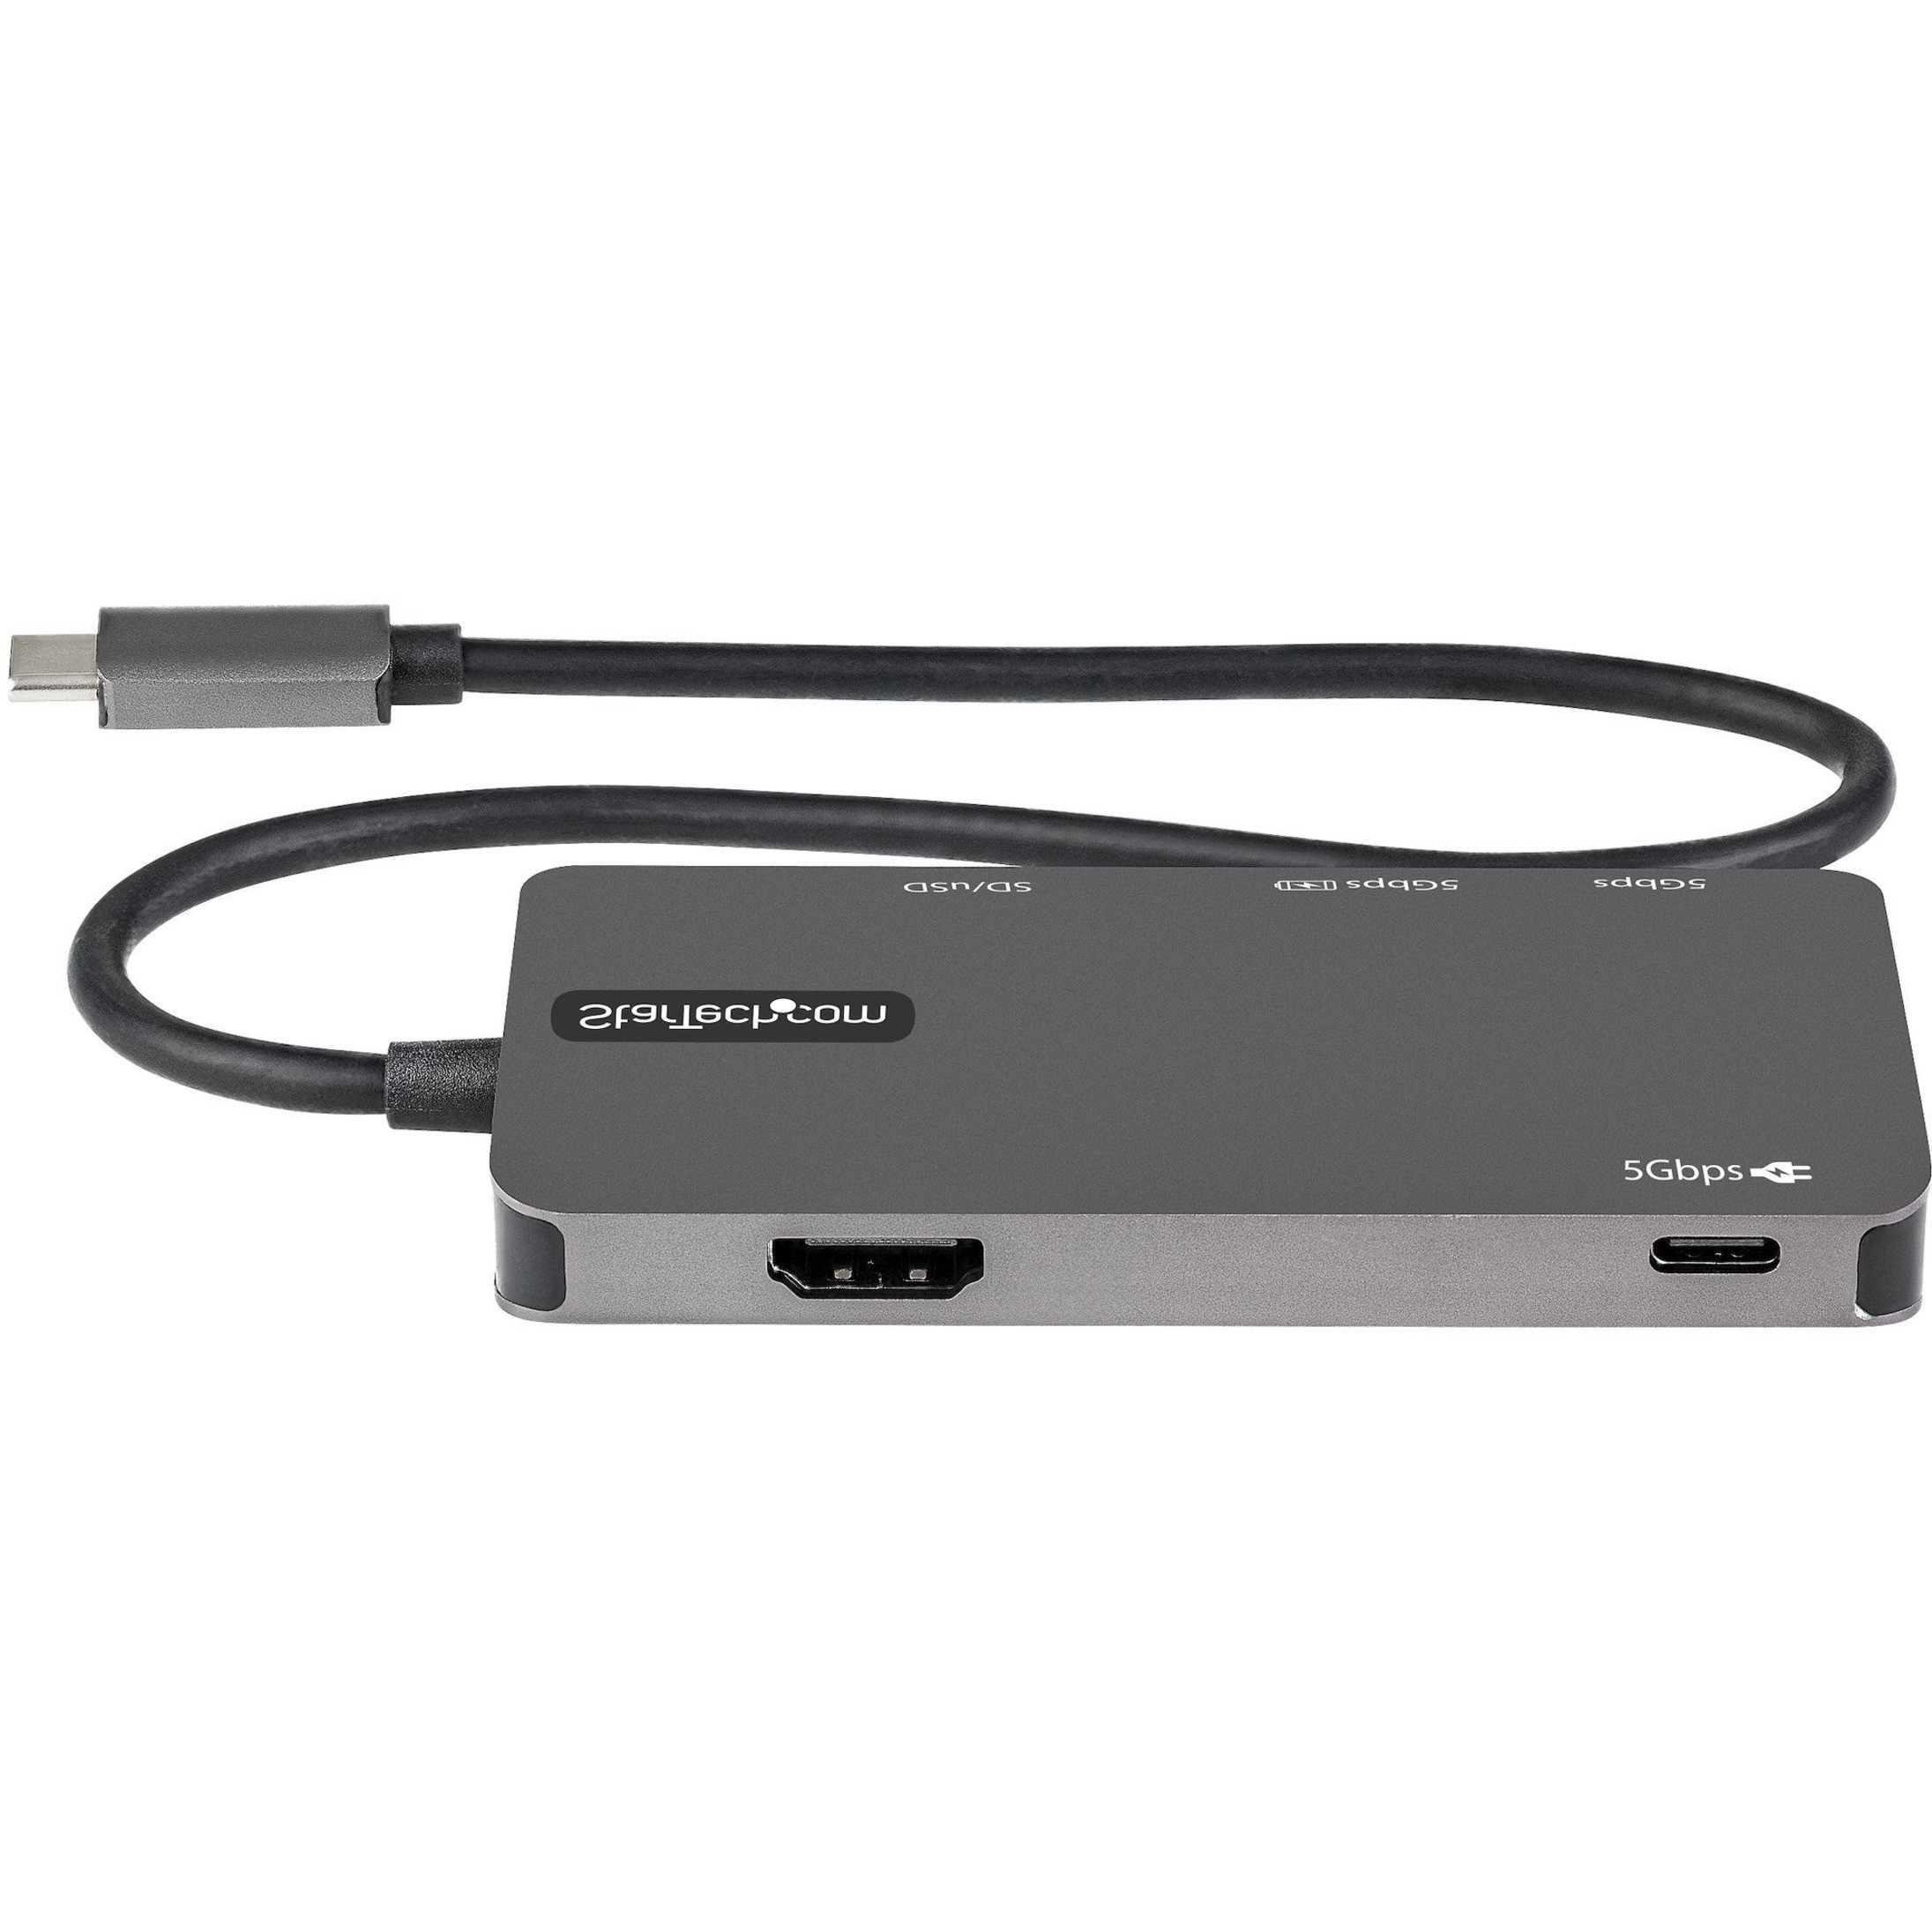 StarTech.com USB C Multiport Adapter USB Type C to 4K HDMI USB 3.0